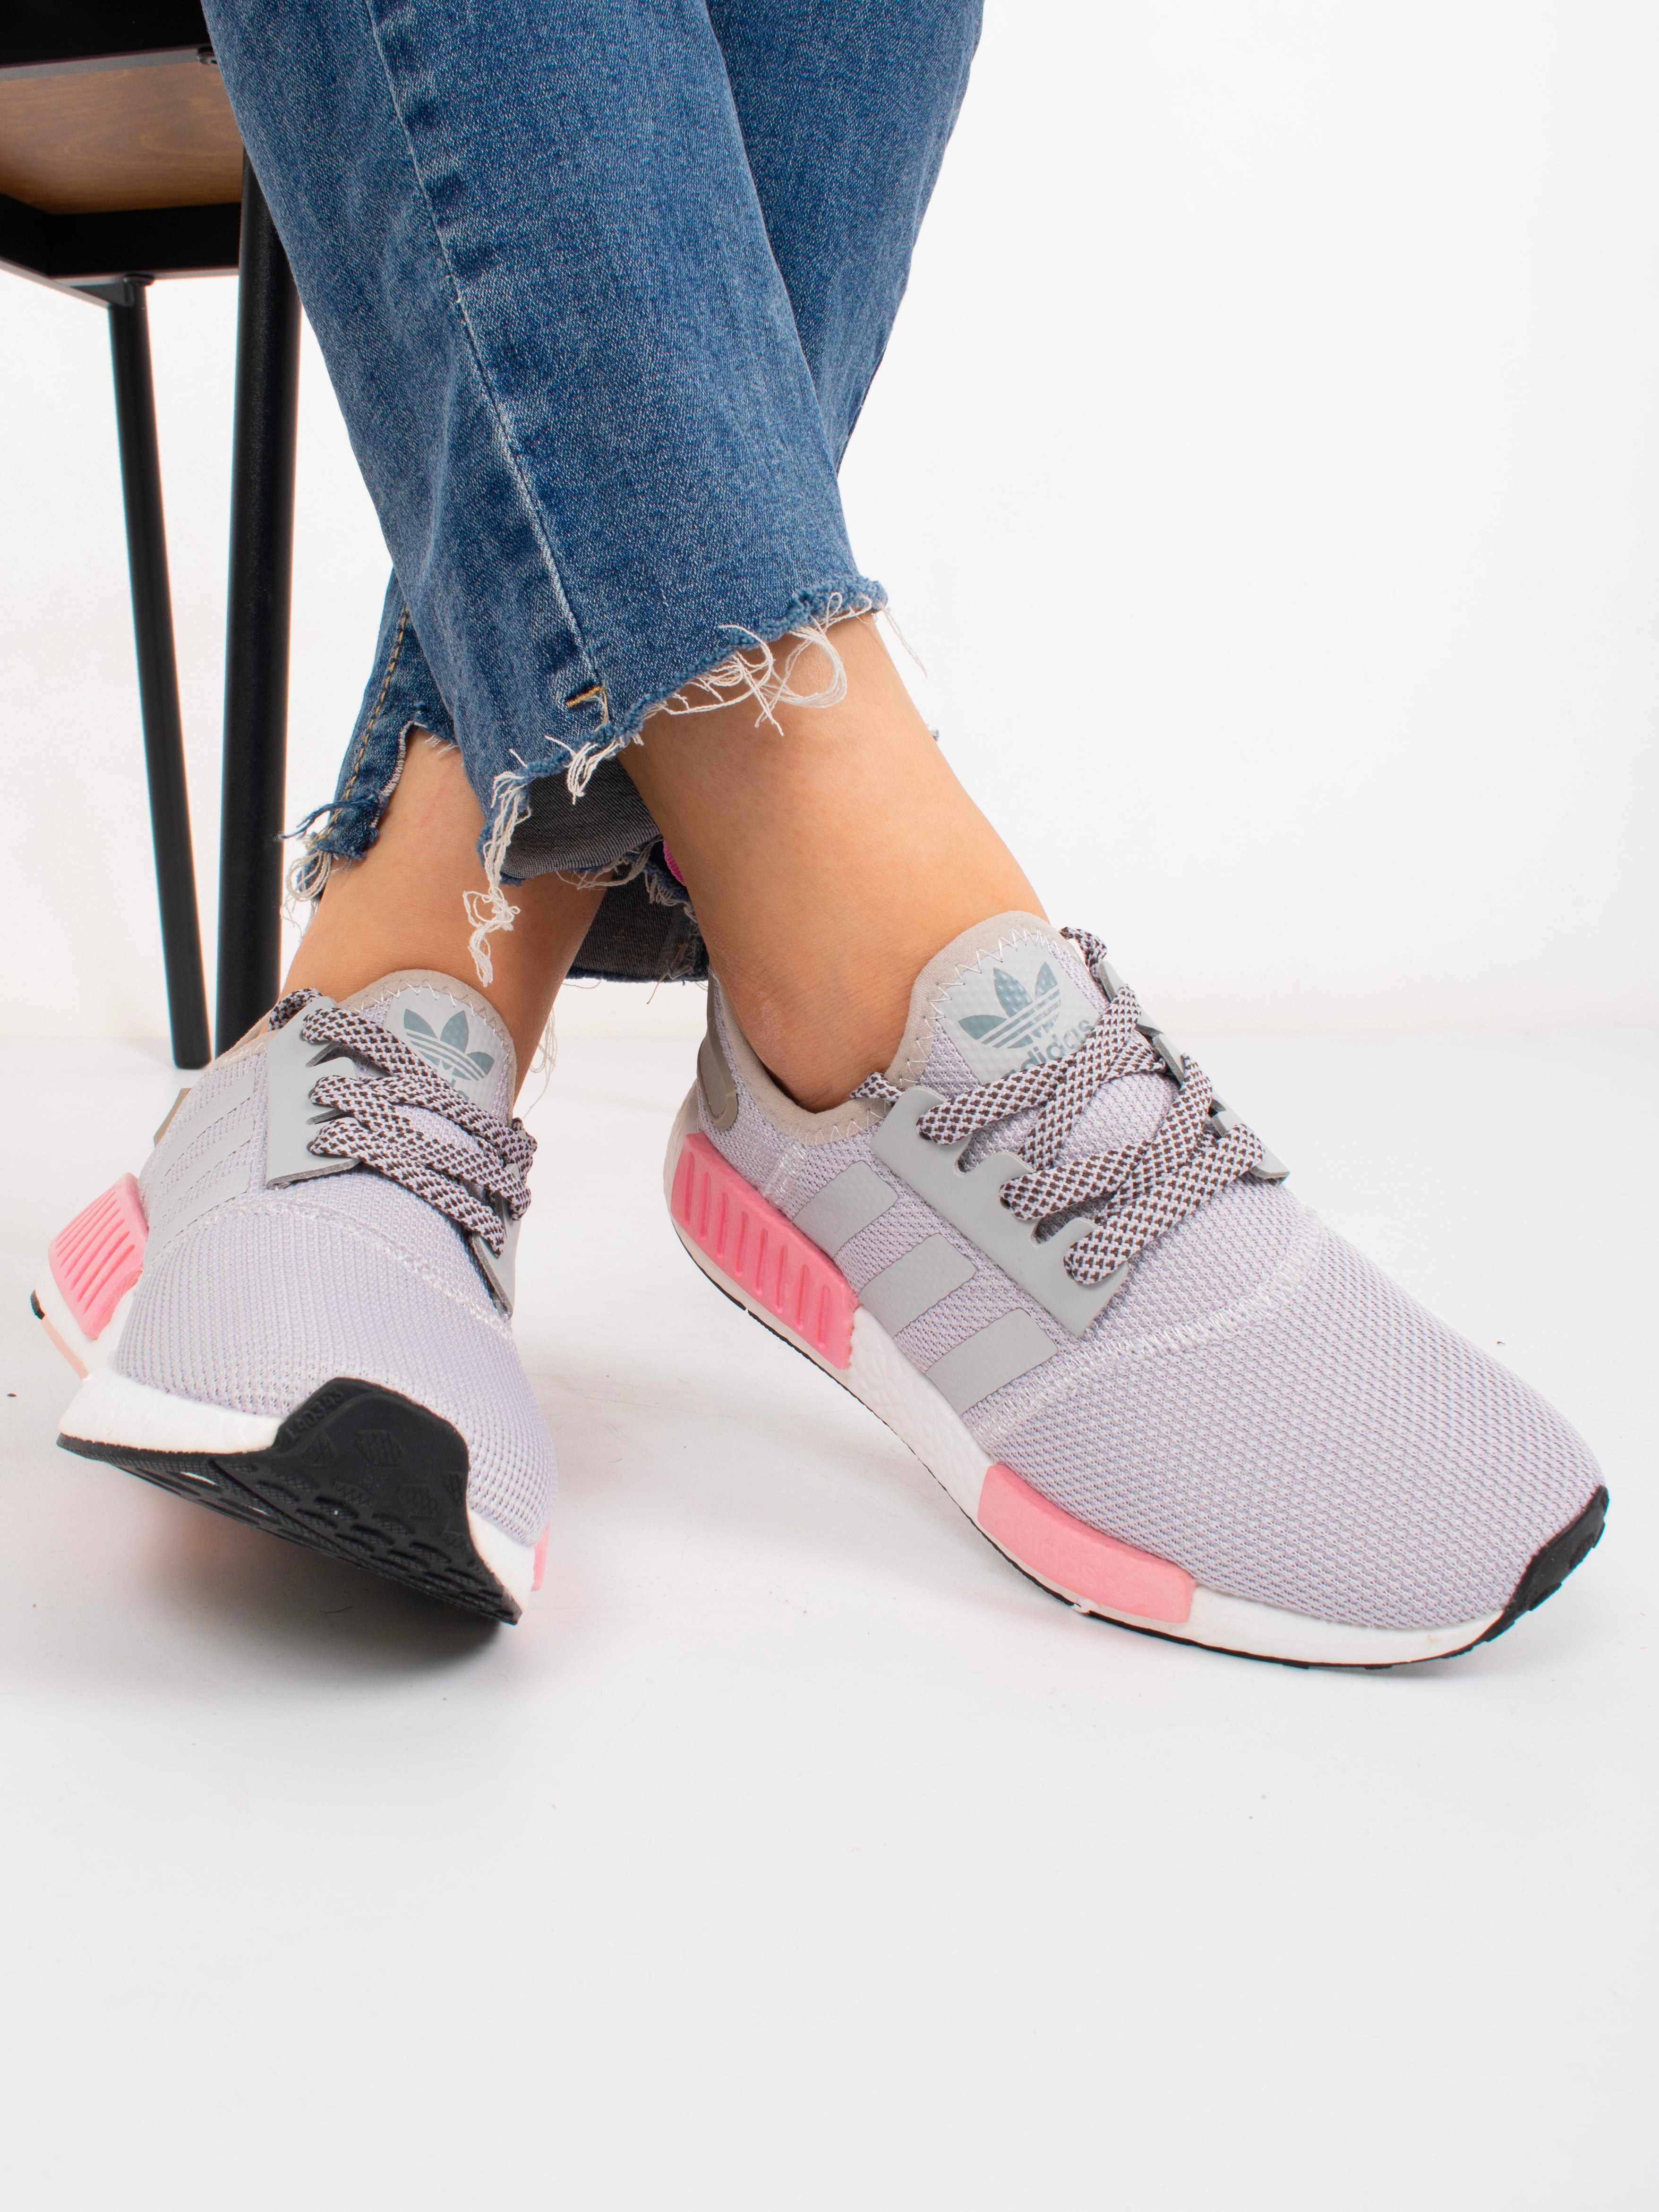 adidas nmd grey pink